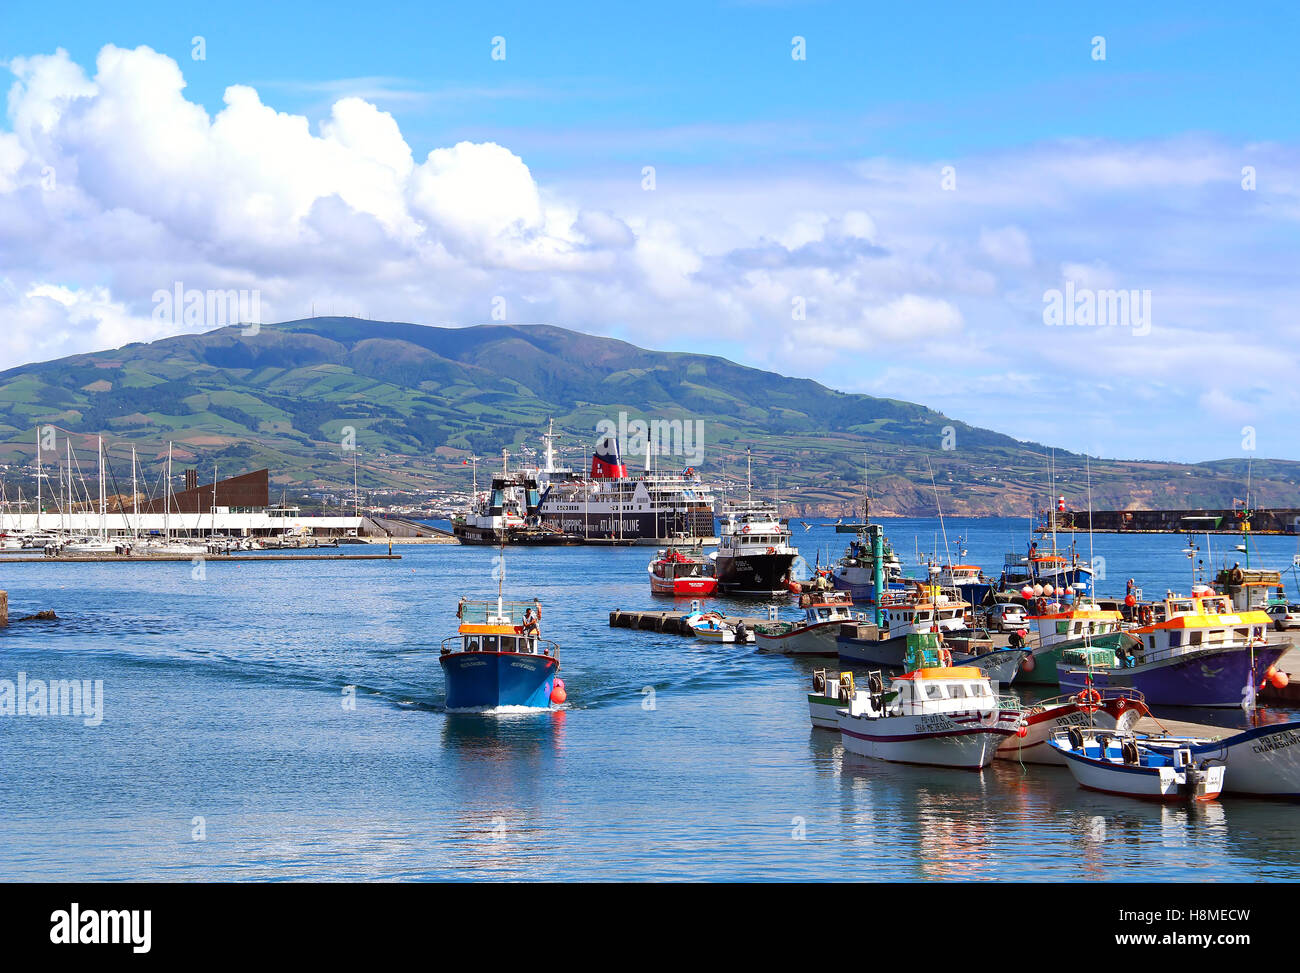 Fishing boats and ships in the harbor of Ponta Delgada on Sao Miguel island, Azores Stock Photo